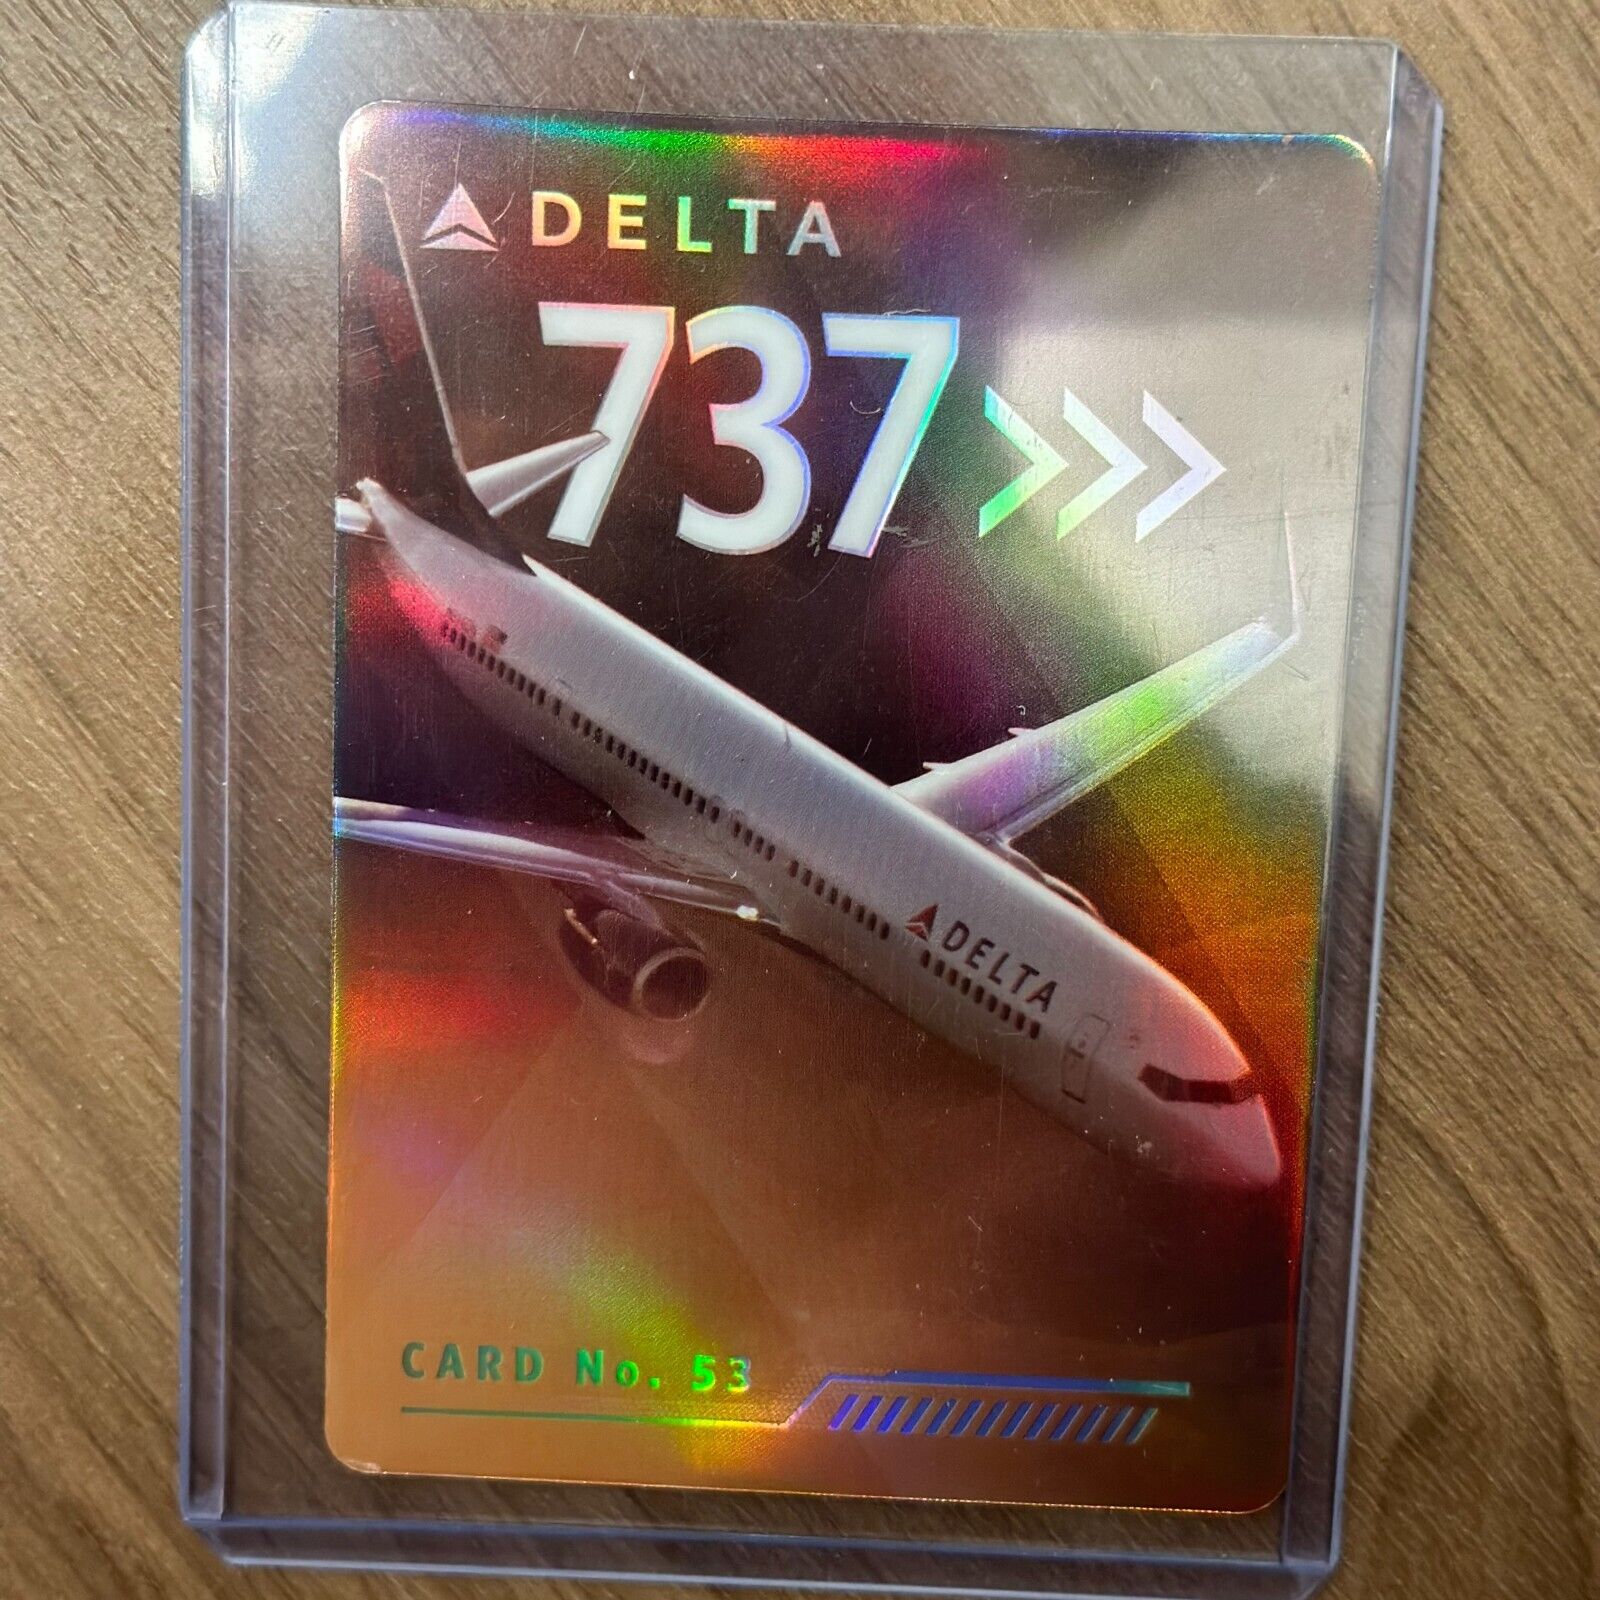 DELTA AIR LINES PILOT TRADING CARD53 BOEING 737-900ER CARD 2022 MINT HARD SLEEVE